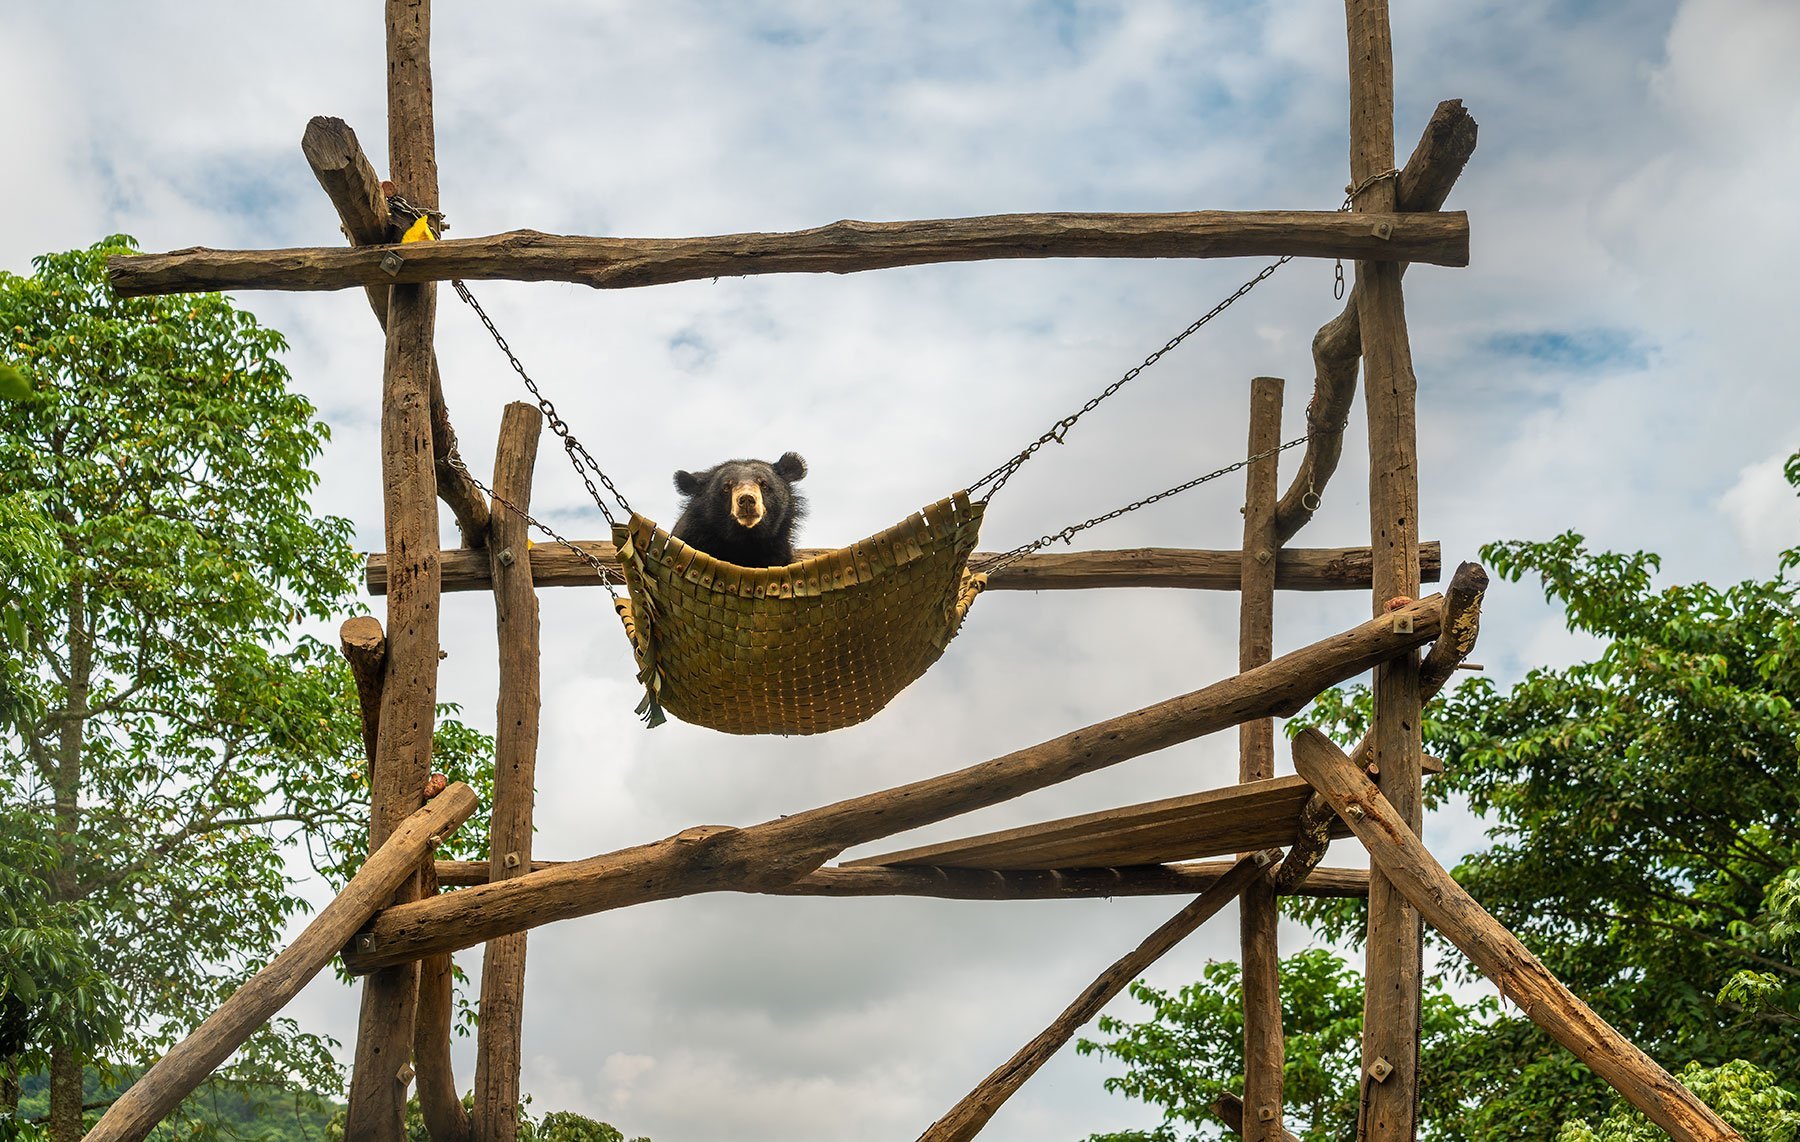 Free the Bears | Laos and Cambodia